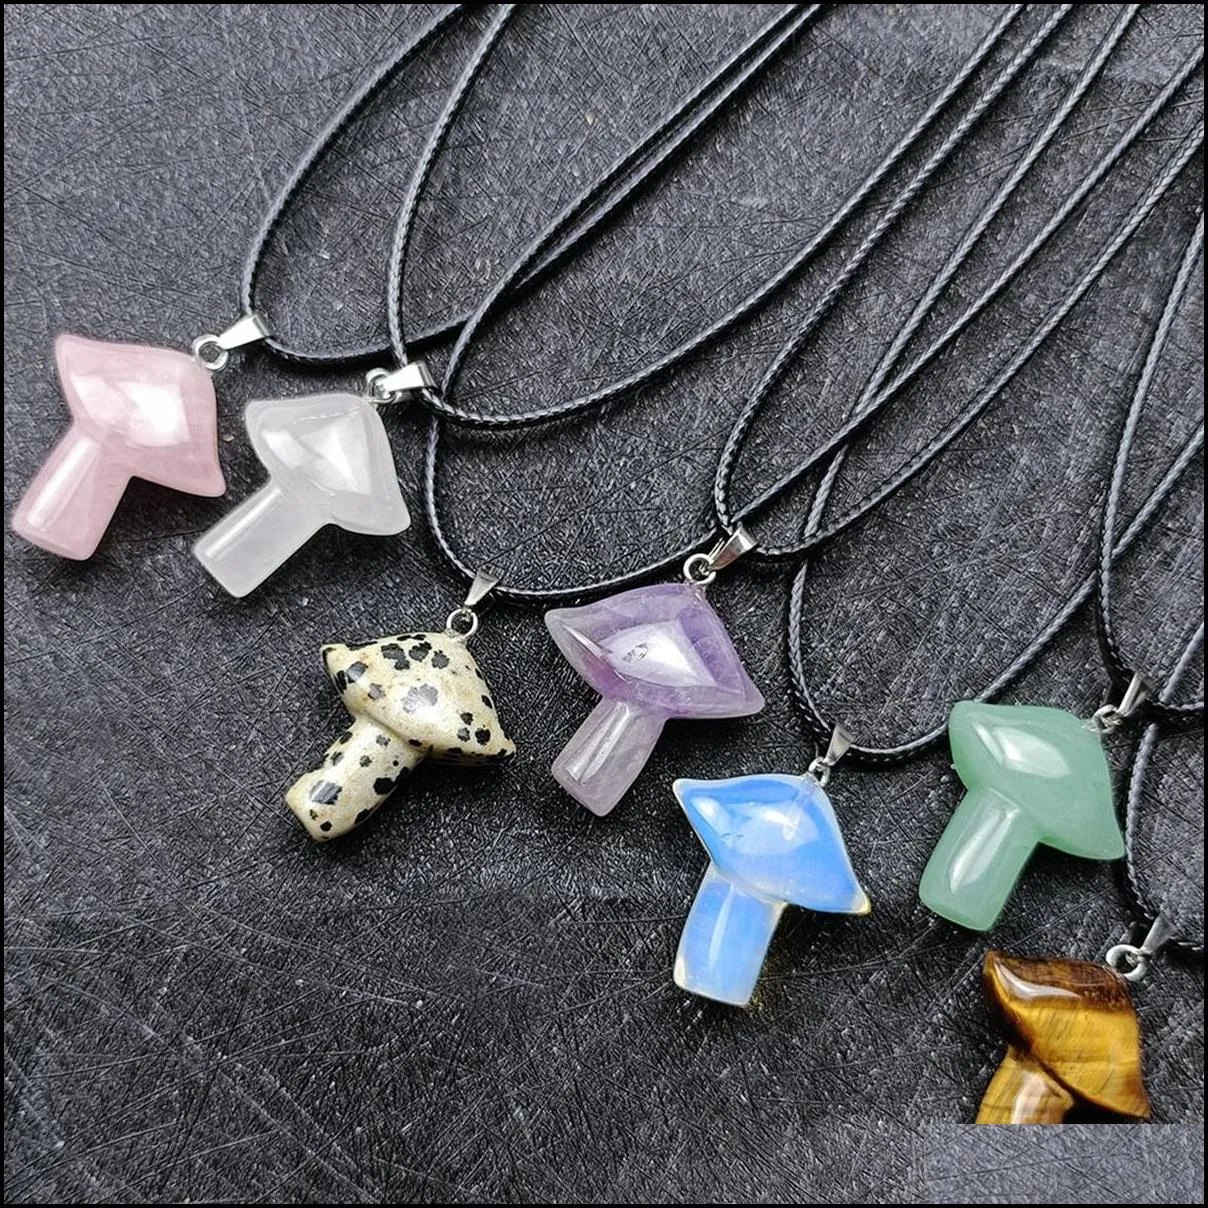 mushroom gemstone pendant necklace for women men natural healing chakra quartz crystal rock charm choker jewelry 45cm black leather